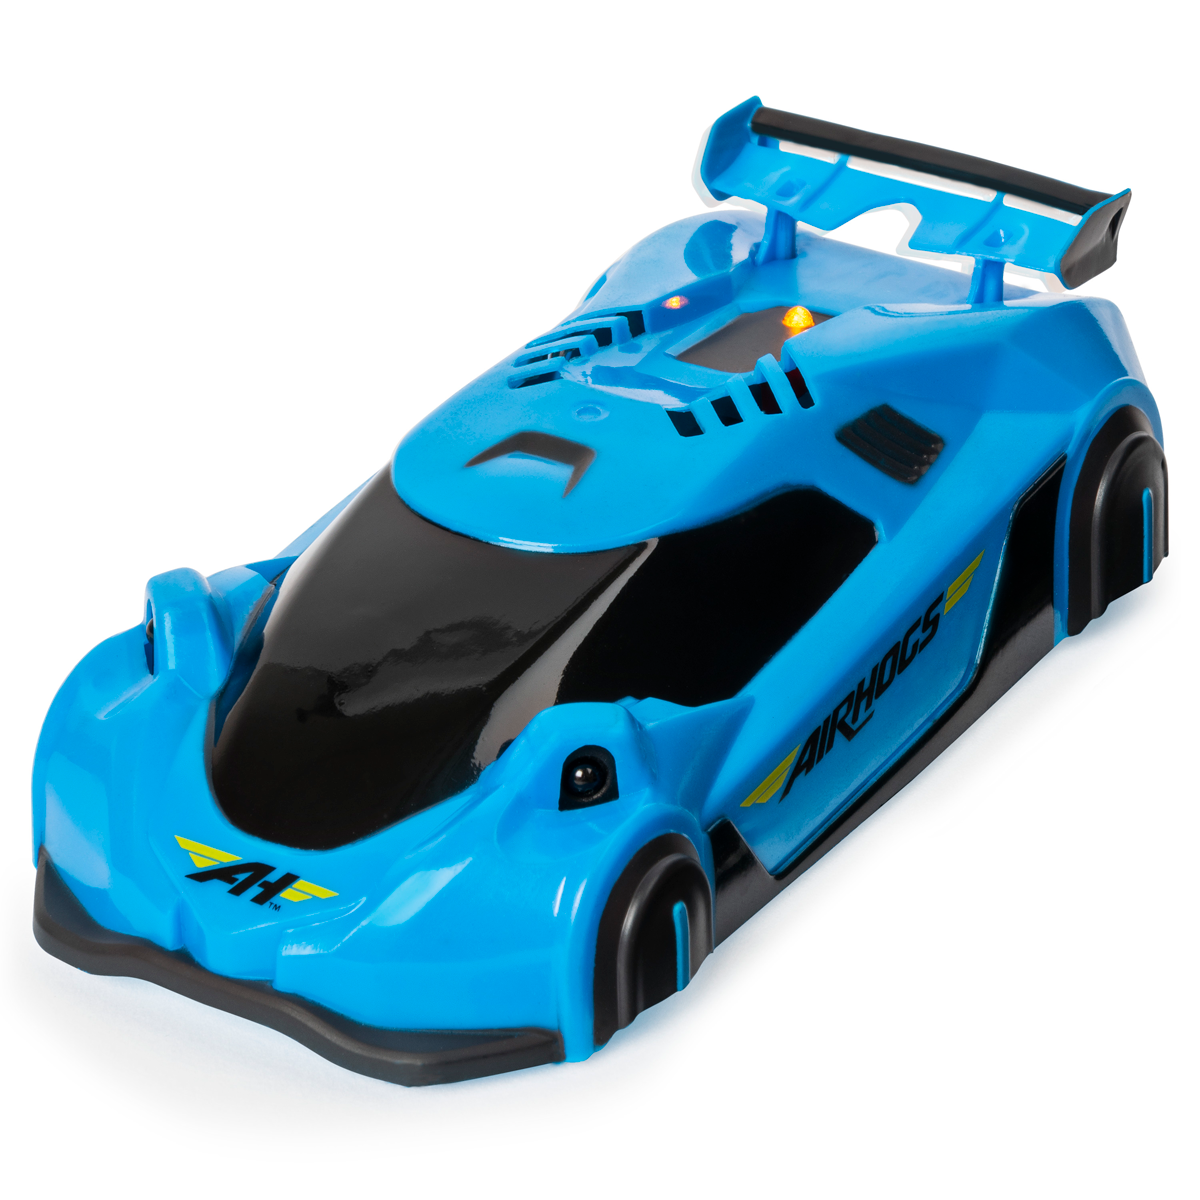 Air Hogs Zero Gravity Laser Wall-Climbing Race Car - Blue